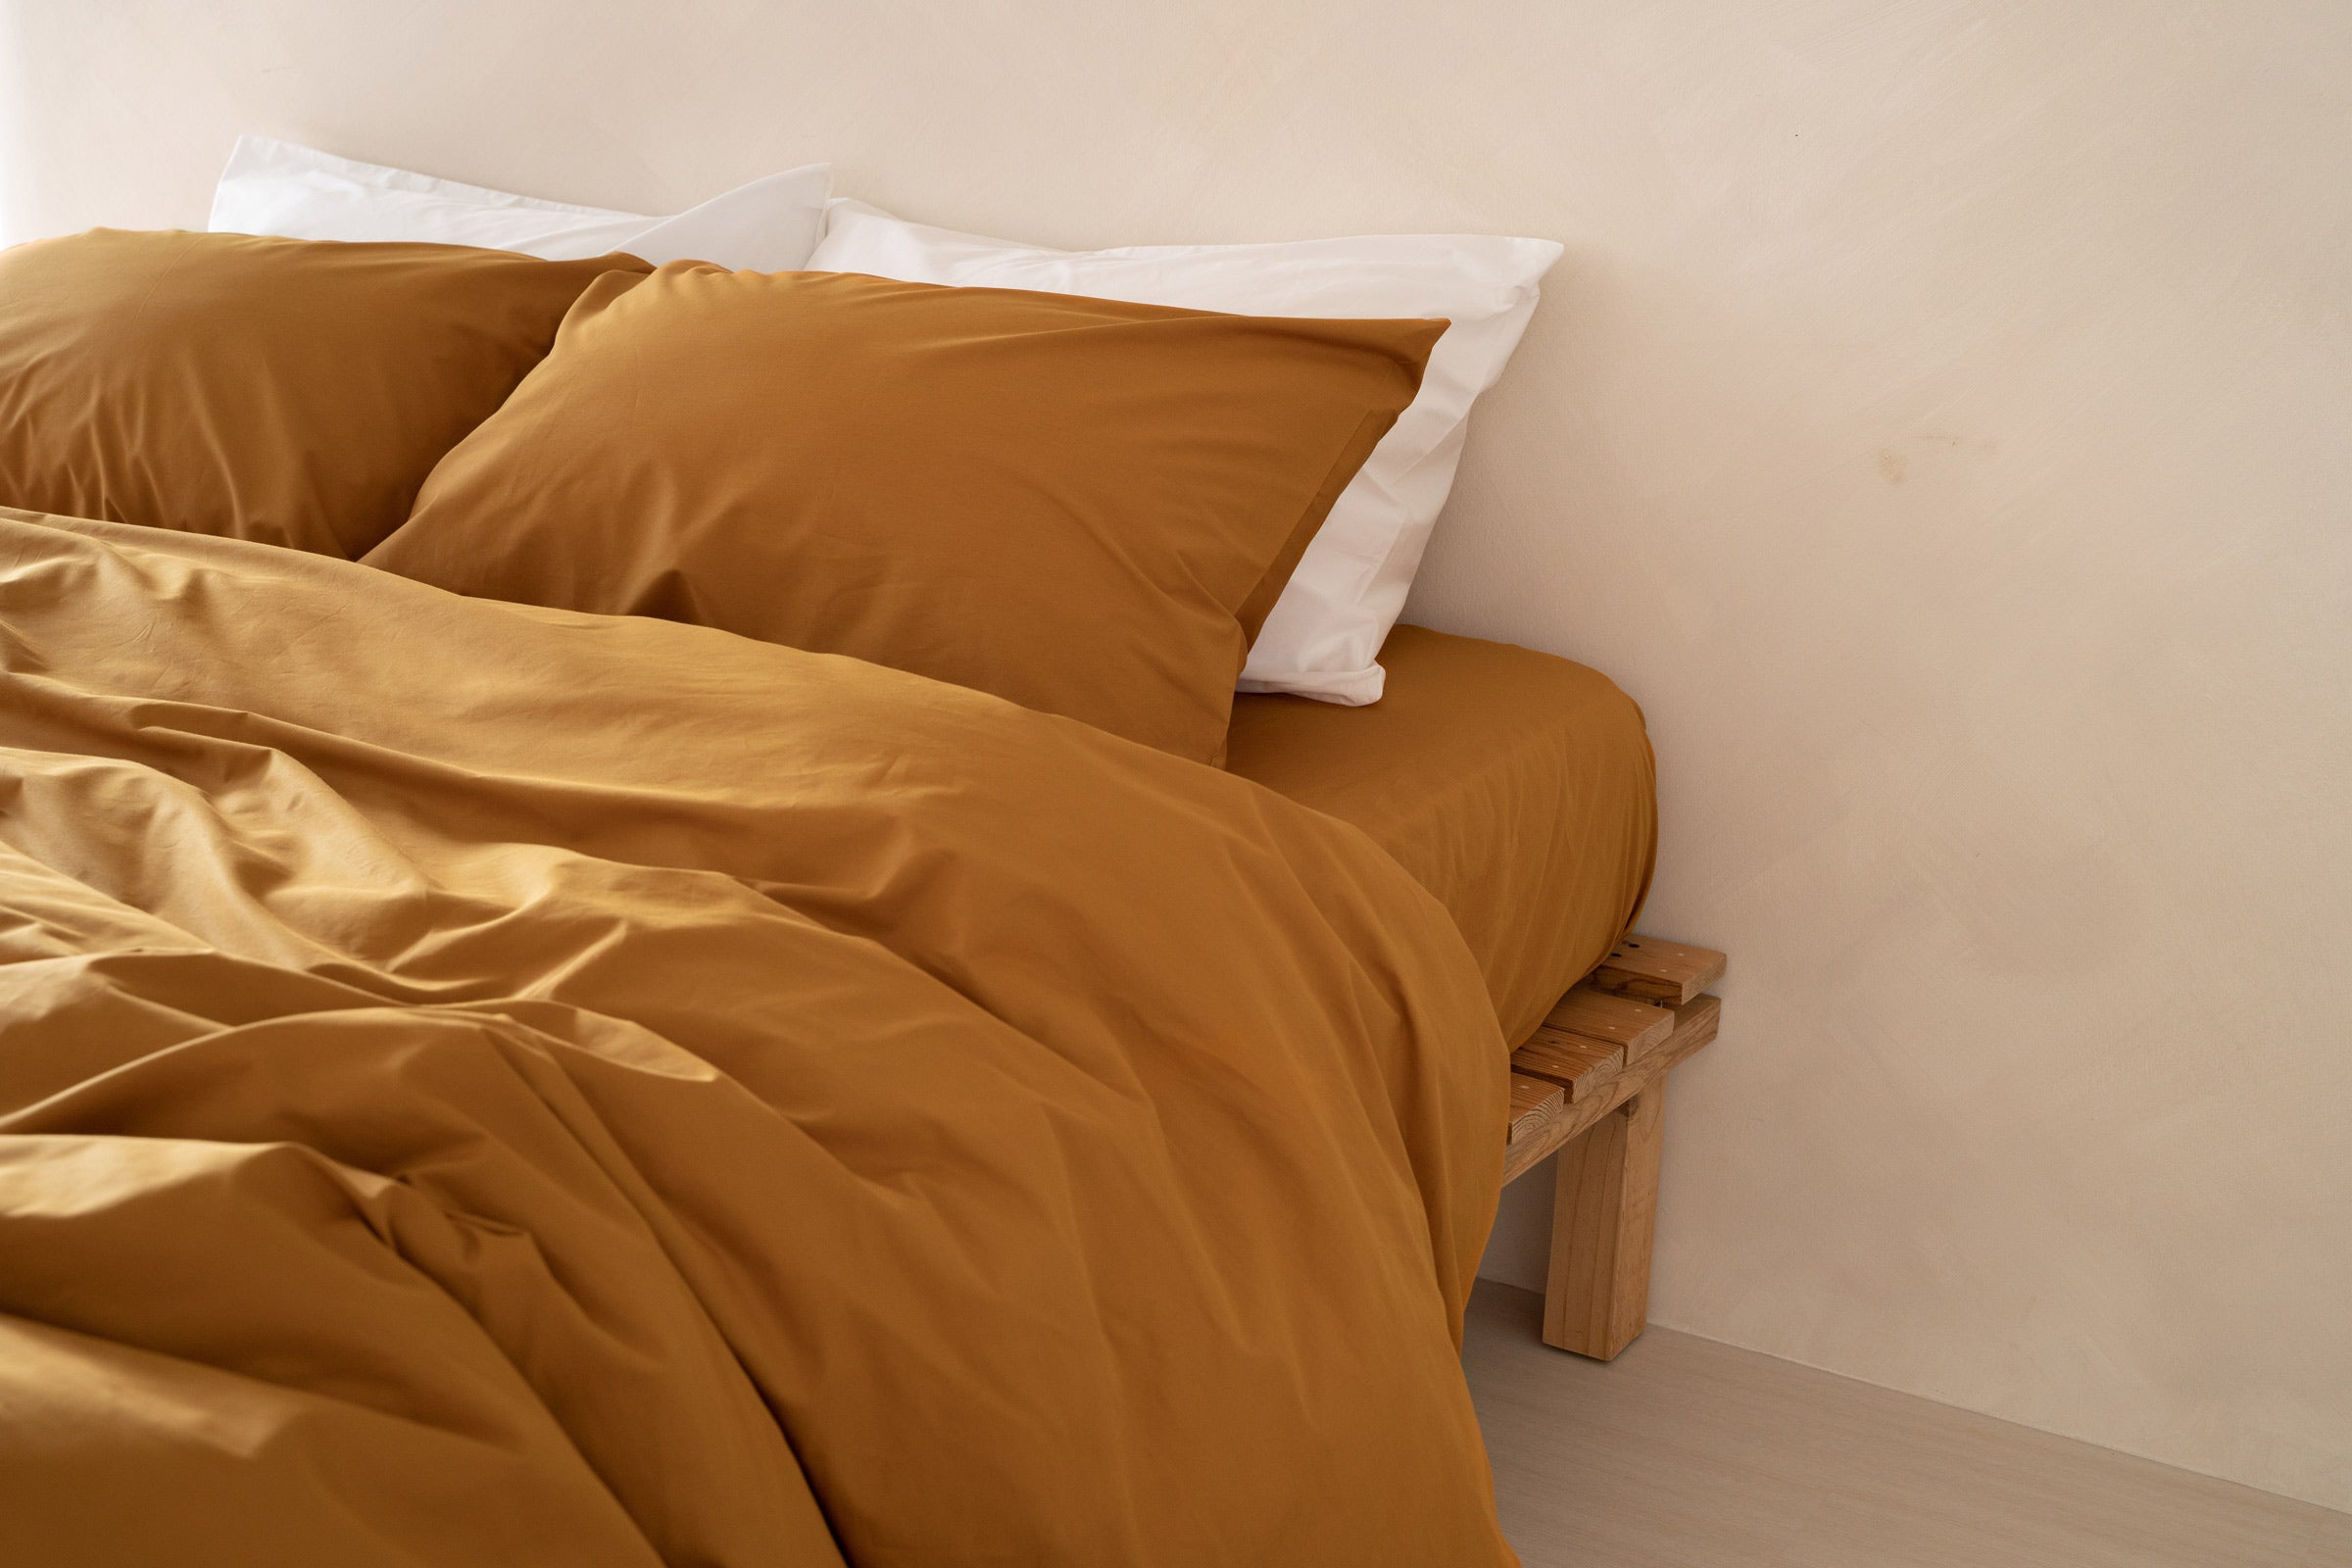 crisp-mustard-duvet-cover-fitted-sheet-pillowcase-pair-white-pillowcase-pair-side-view-by-sojao.jpg